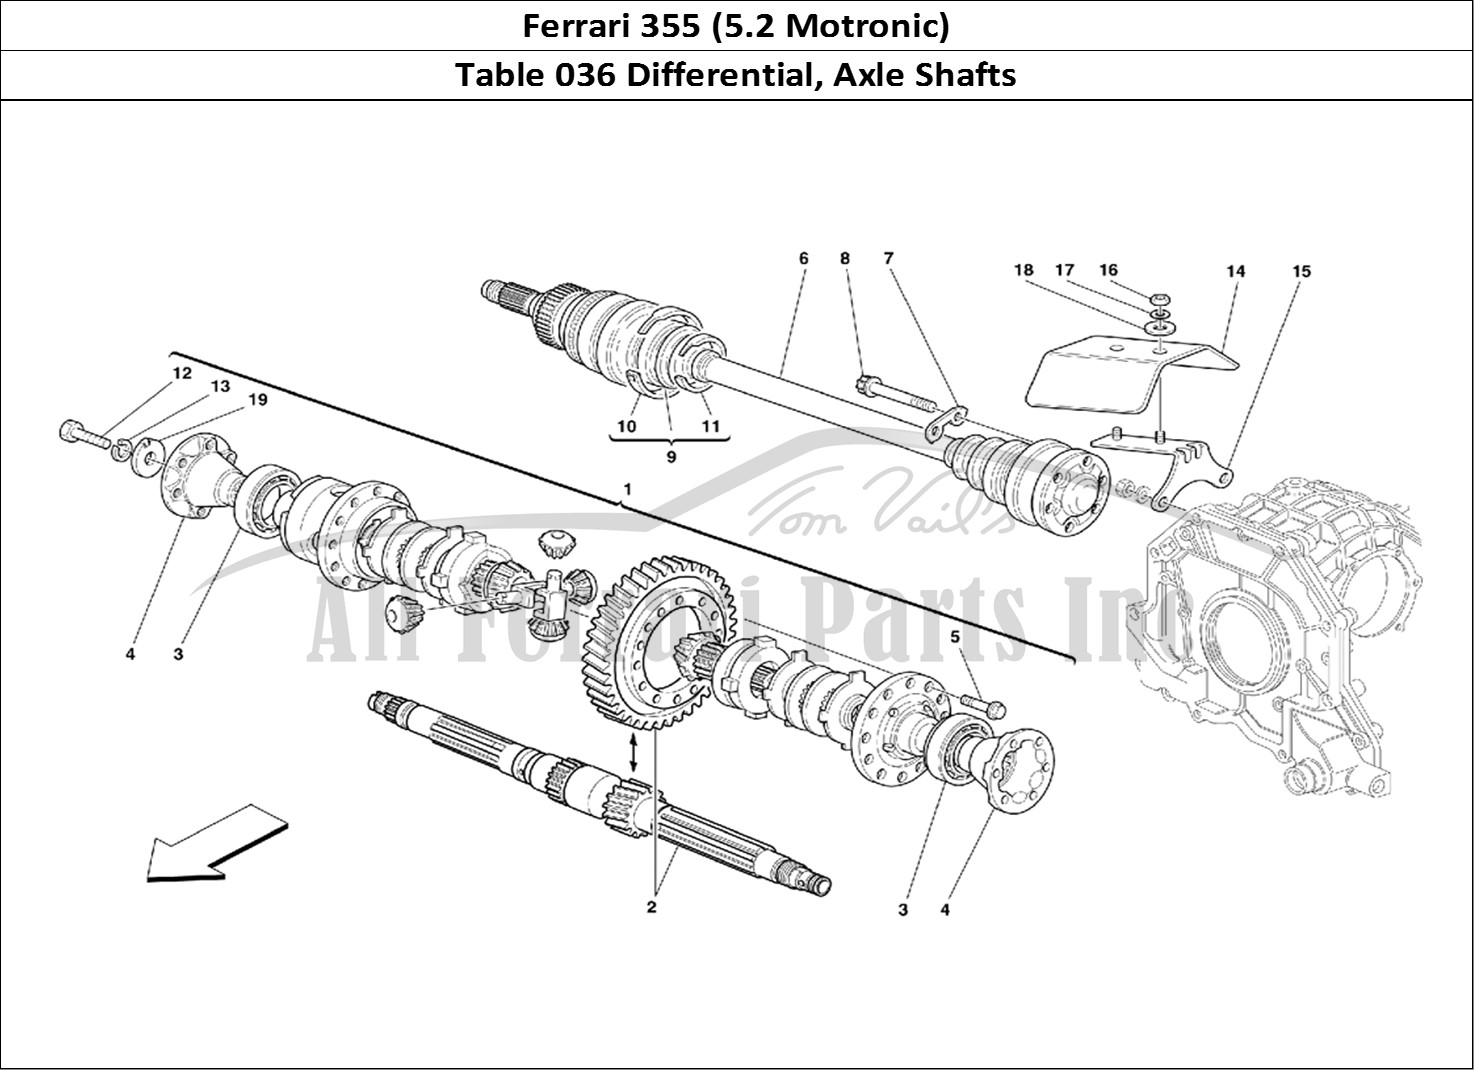 Ferrari Parts Ferrari 355 (5.2 Motronic) Page 036 Differential & Axle Shaft